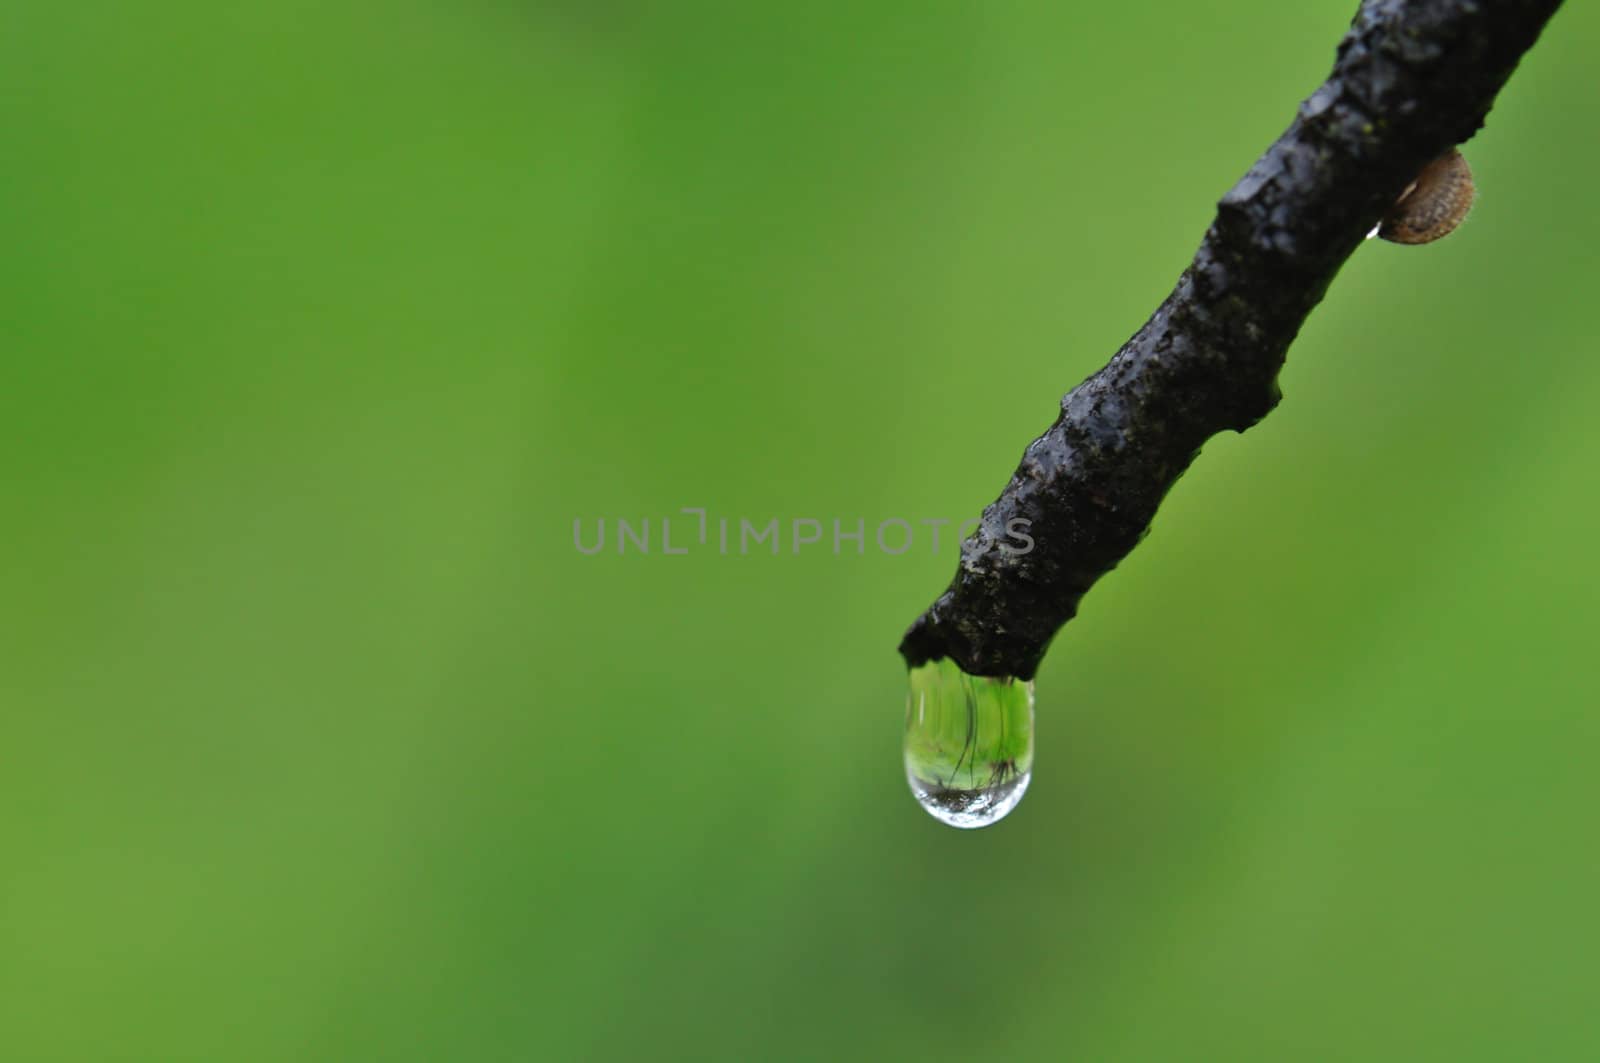 raindrop on tree branch by sirylok